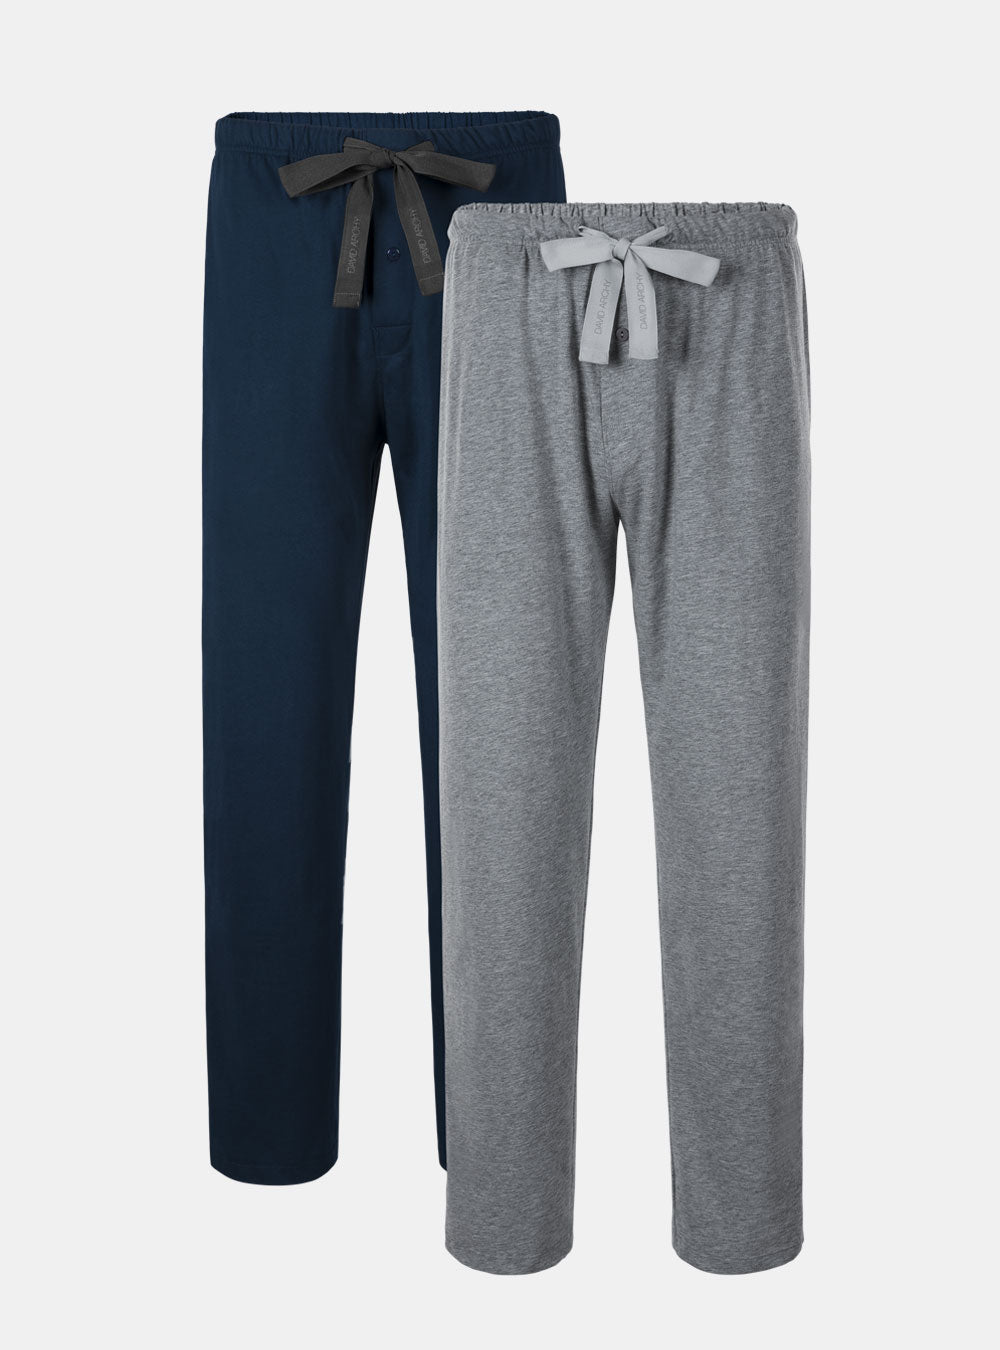 David Archy 2 Packs Cotton Knit Pajama Pants Comfy Mens Soft Cotton Boys  Knit Pajama Pants